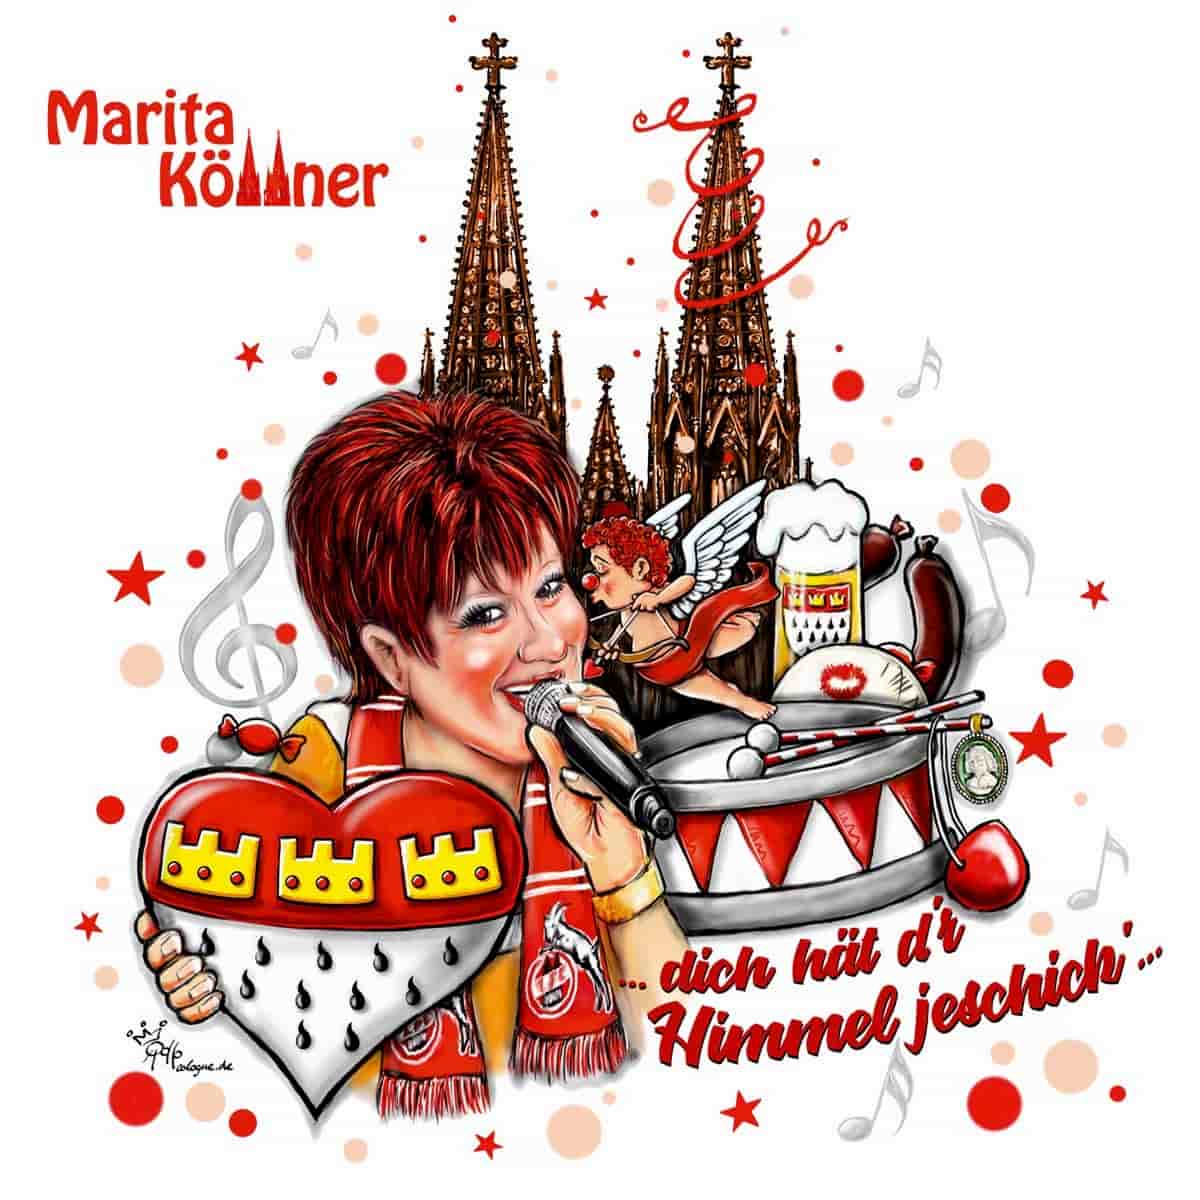 Marita Köllner - CD Dich hät dr Himmel jeschick 2019